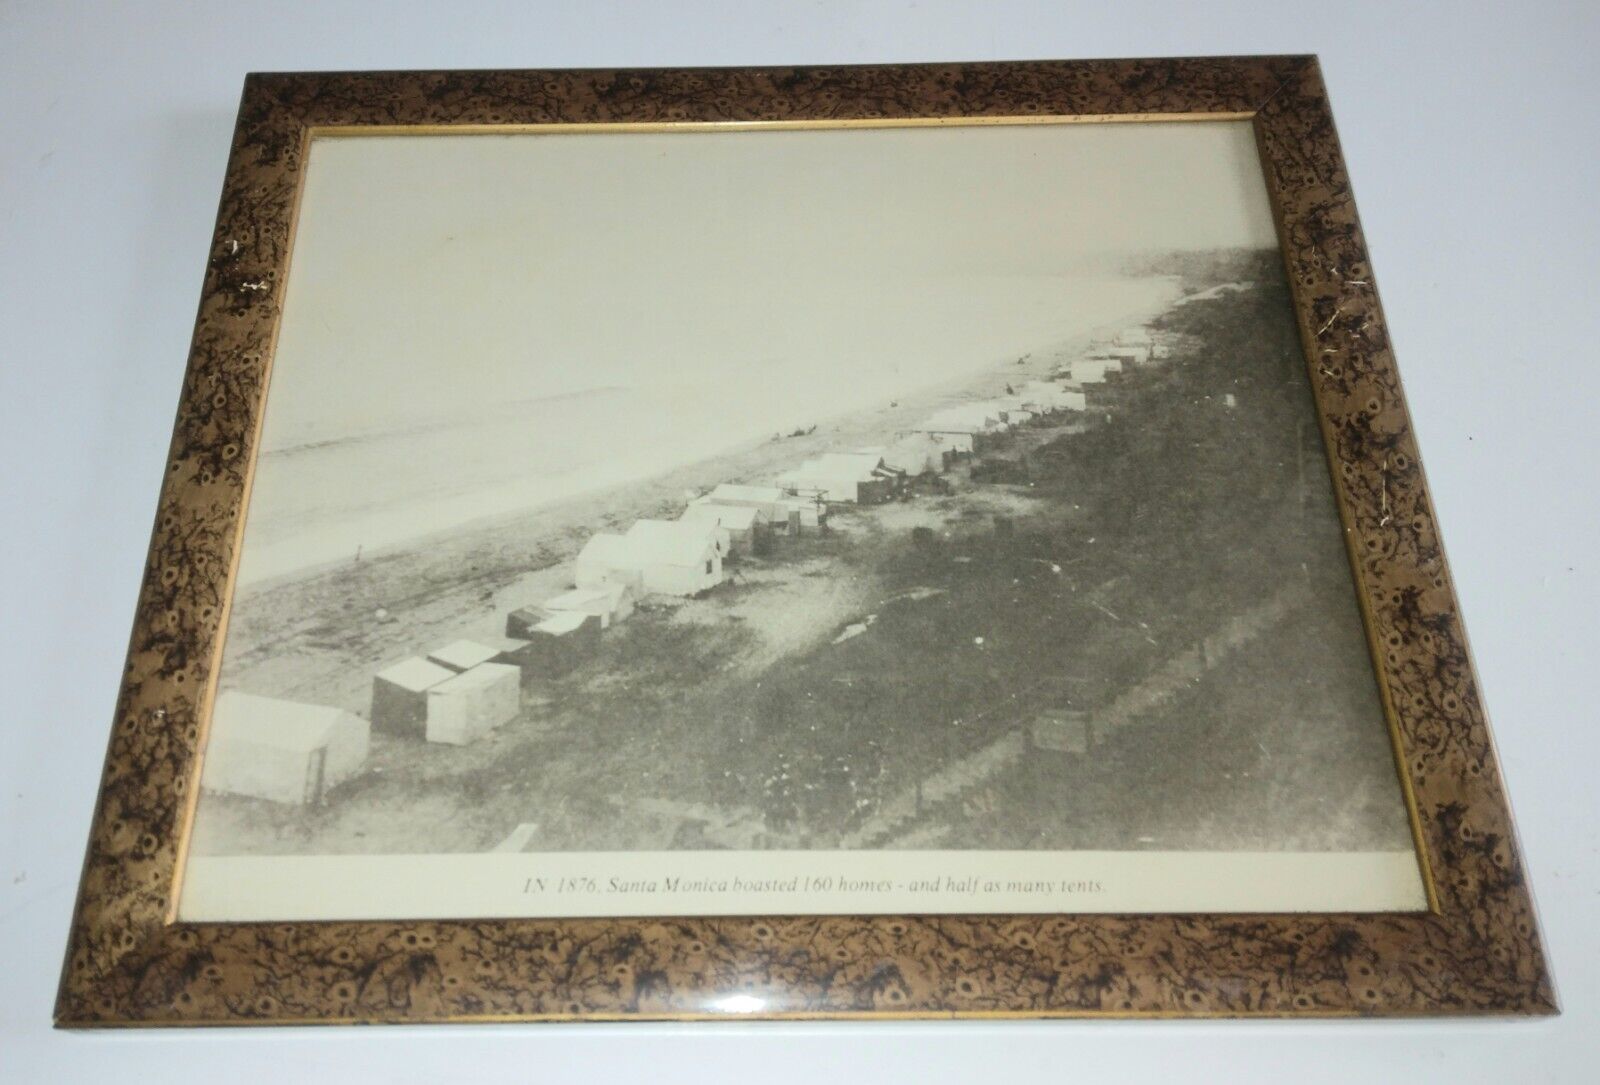  Santa Monica CA Vintage framed photo glass California history Beach with Tents